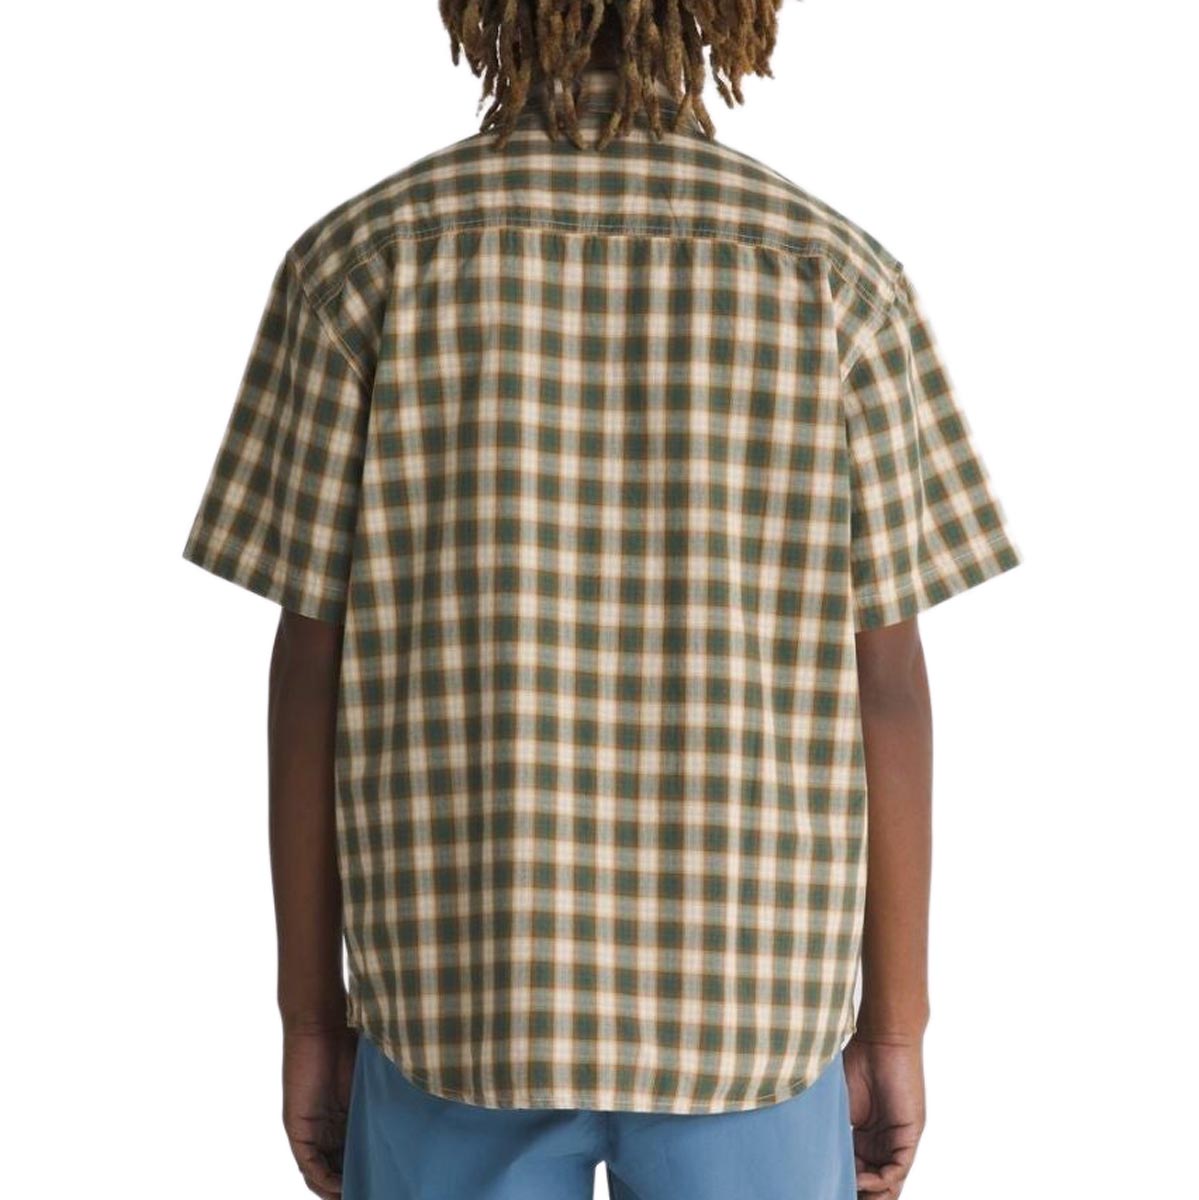 Vans Hadley Woven Shirt - Oatmeal/bistro Green image 2